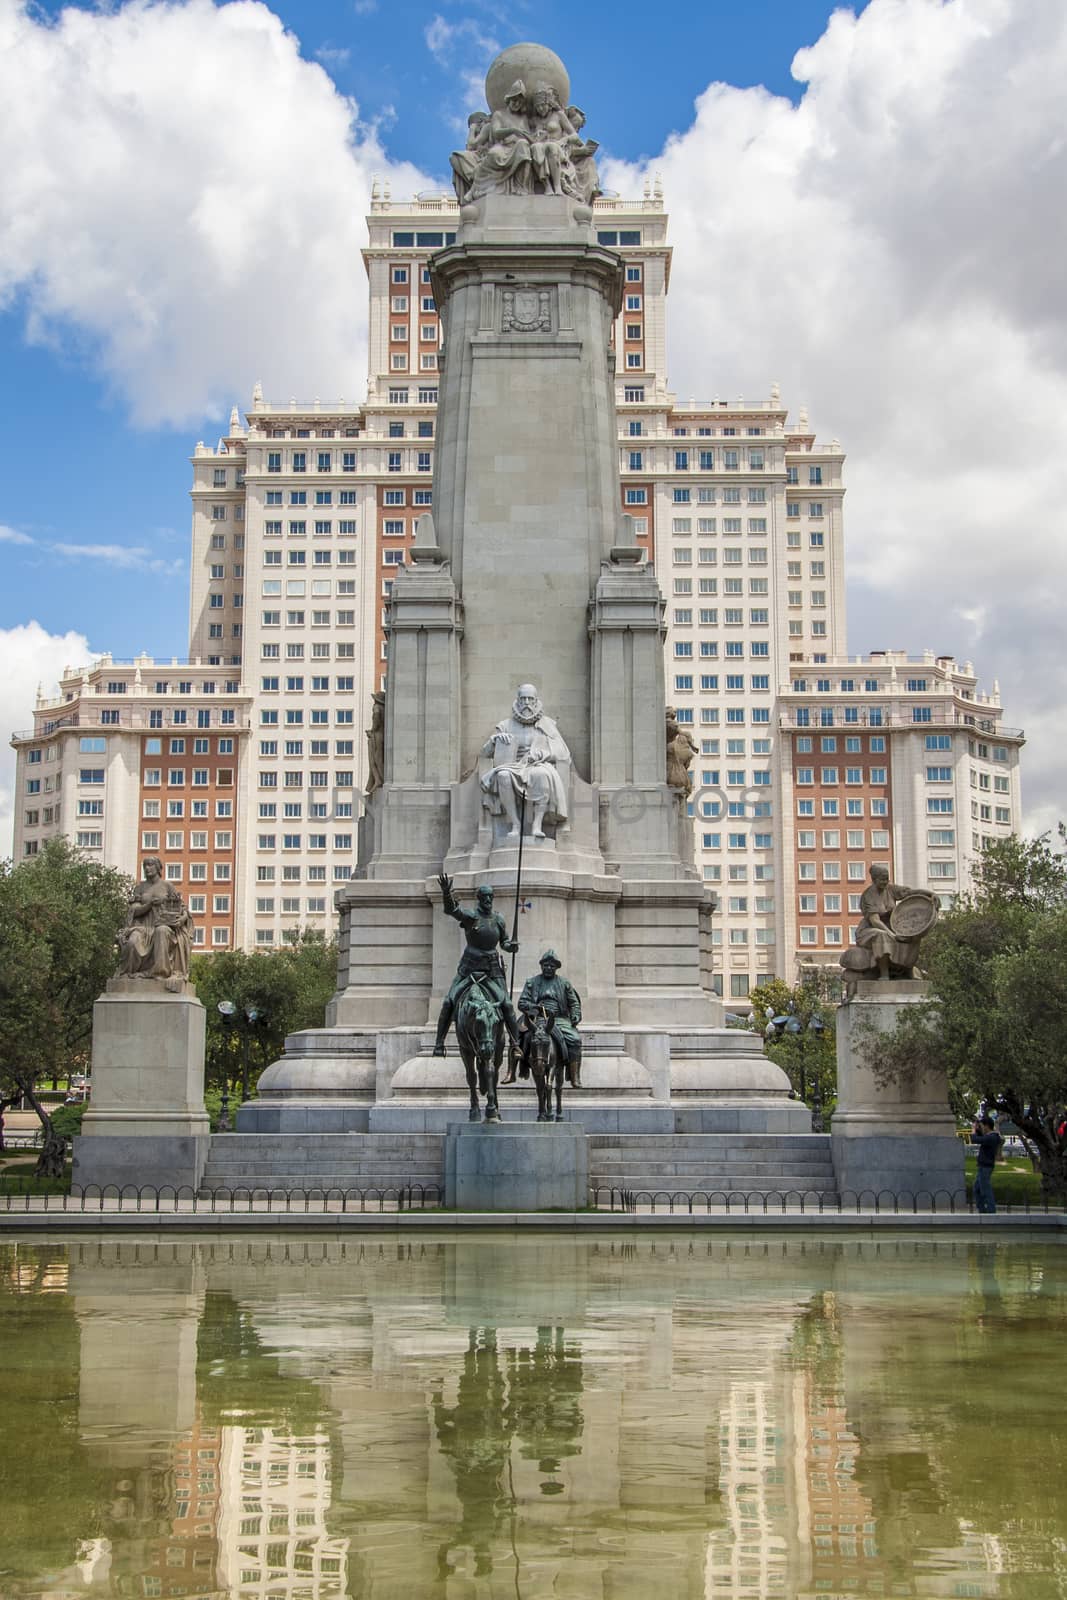 Plaza de Espana in Madrid. Monument to Cervantes by tanaonte